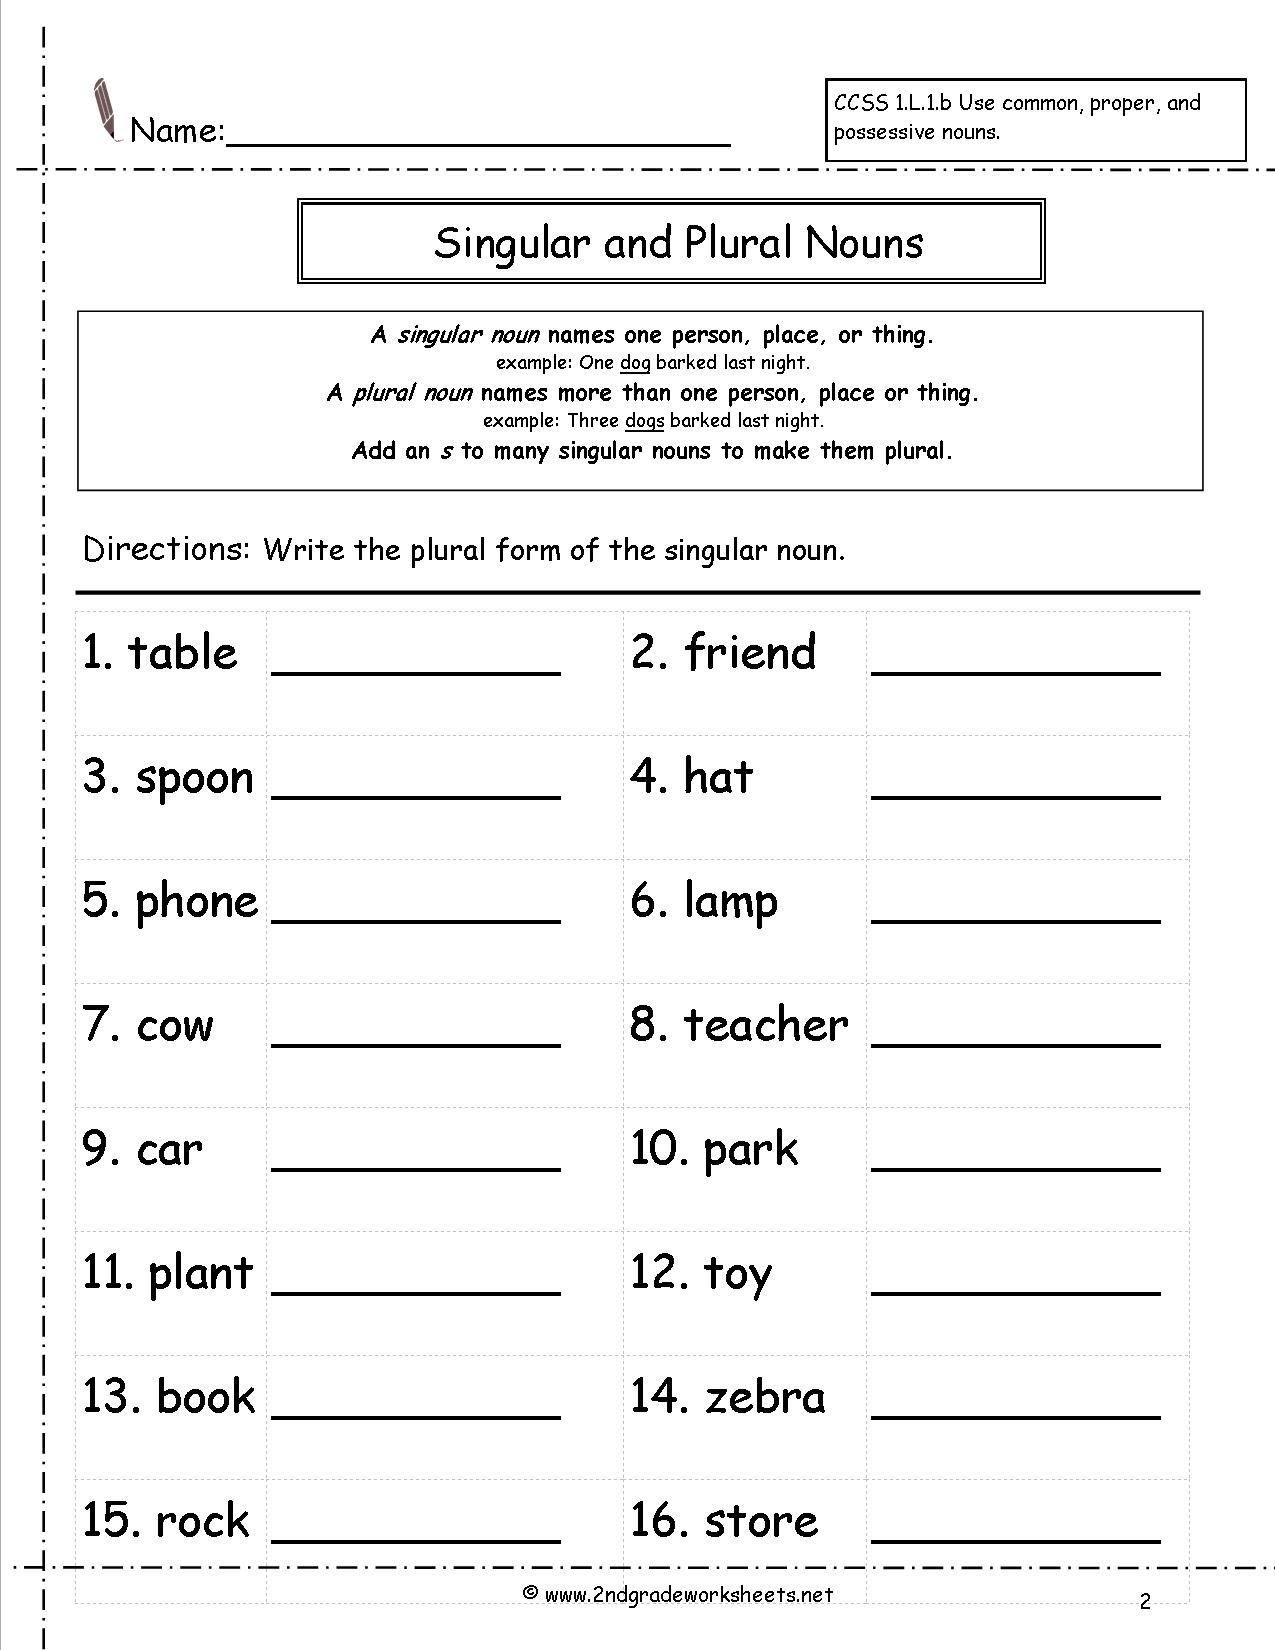 Singular and Plural Nouns Worksheets Grade 1